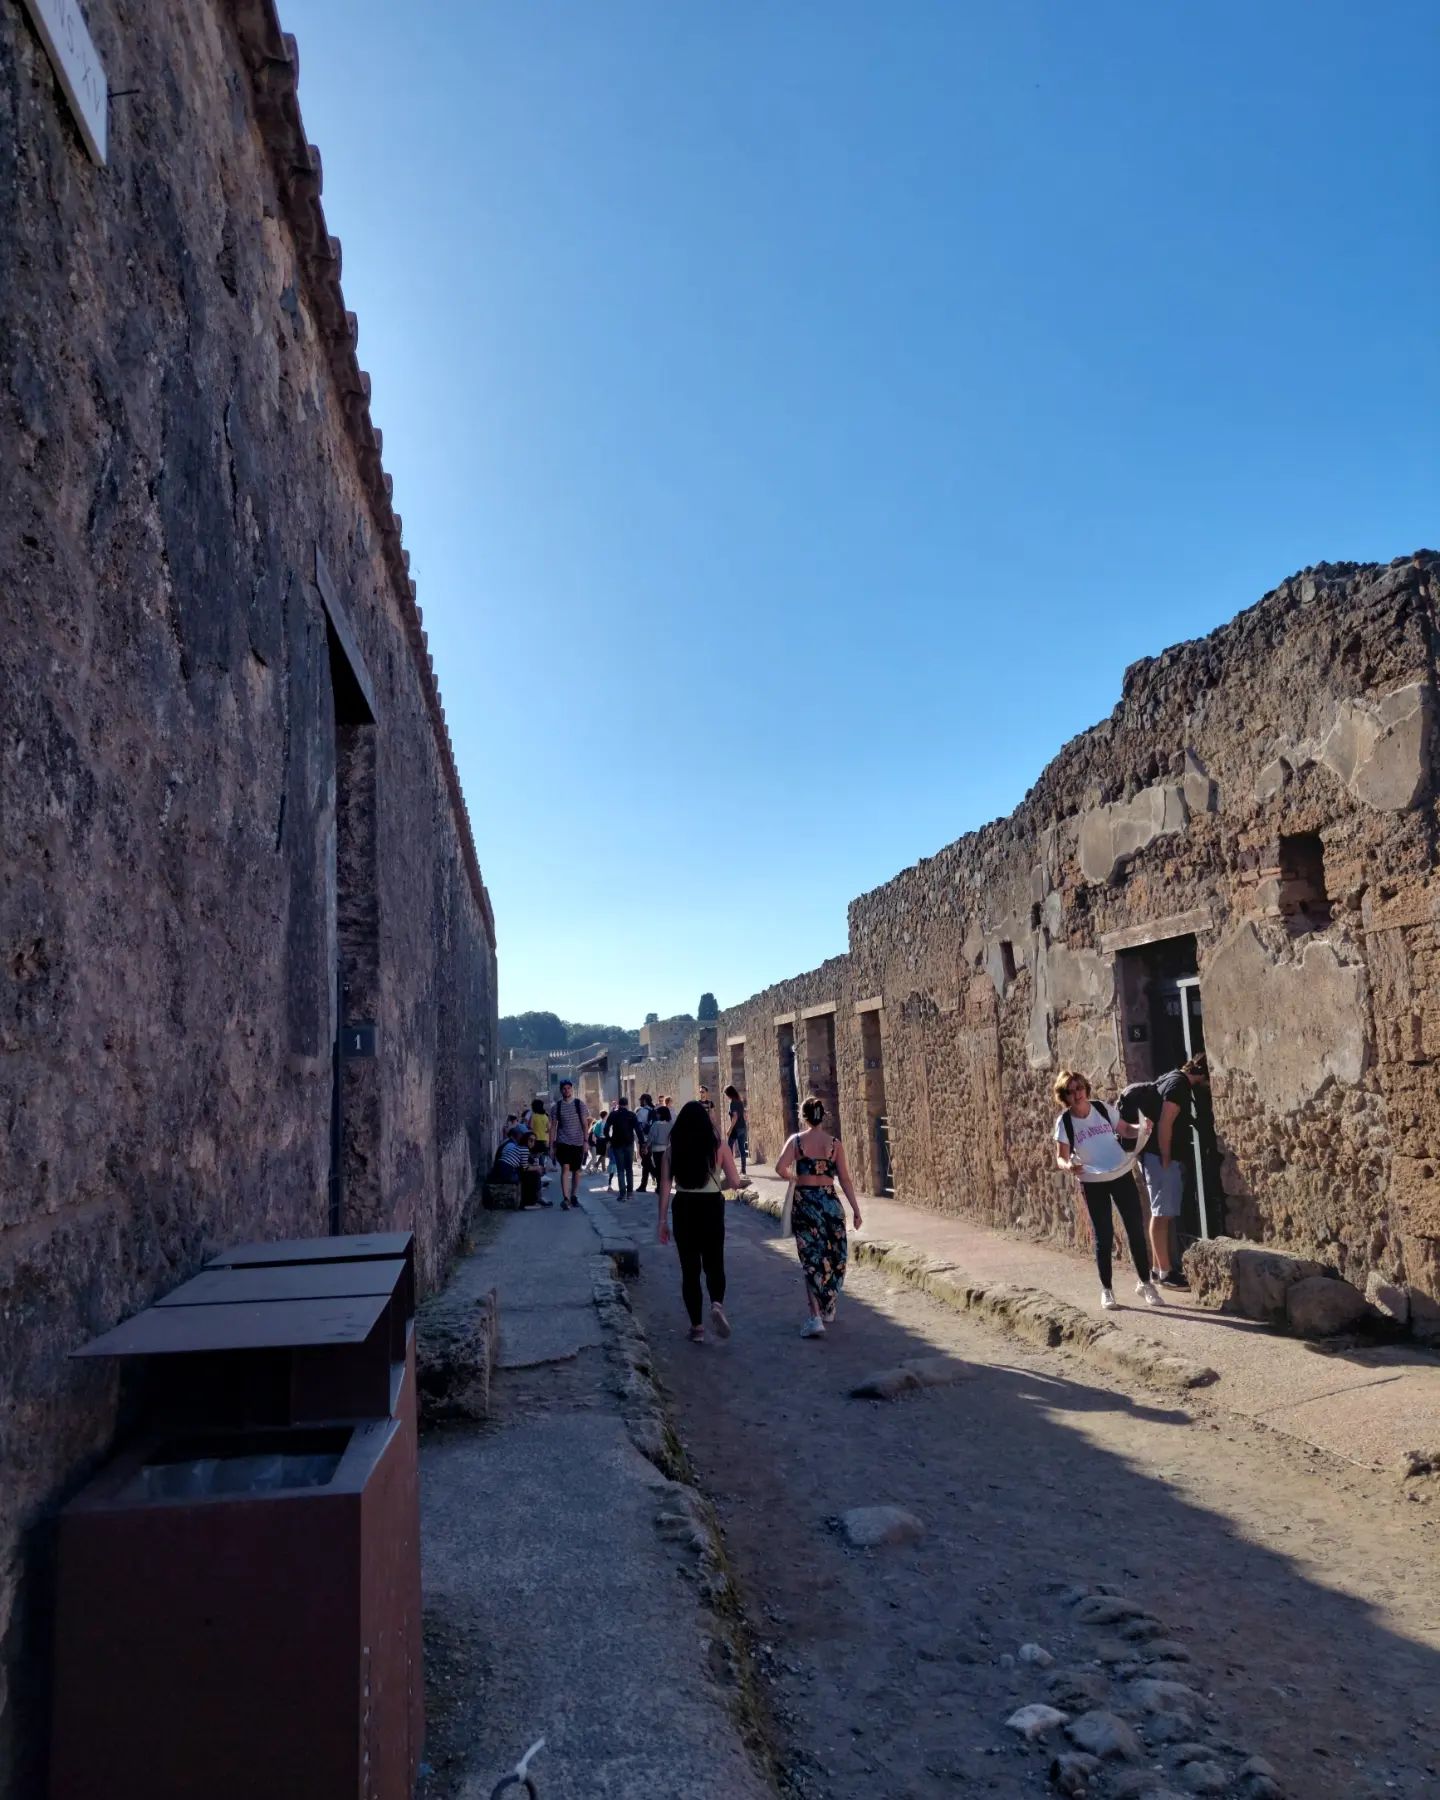 One of the most amazing places I've ever been to. 
.
.
. #pompeii #italy #vesuvio #vesuvius #history #city #photooftheday